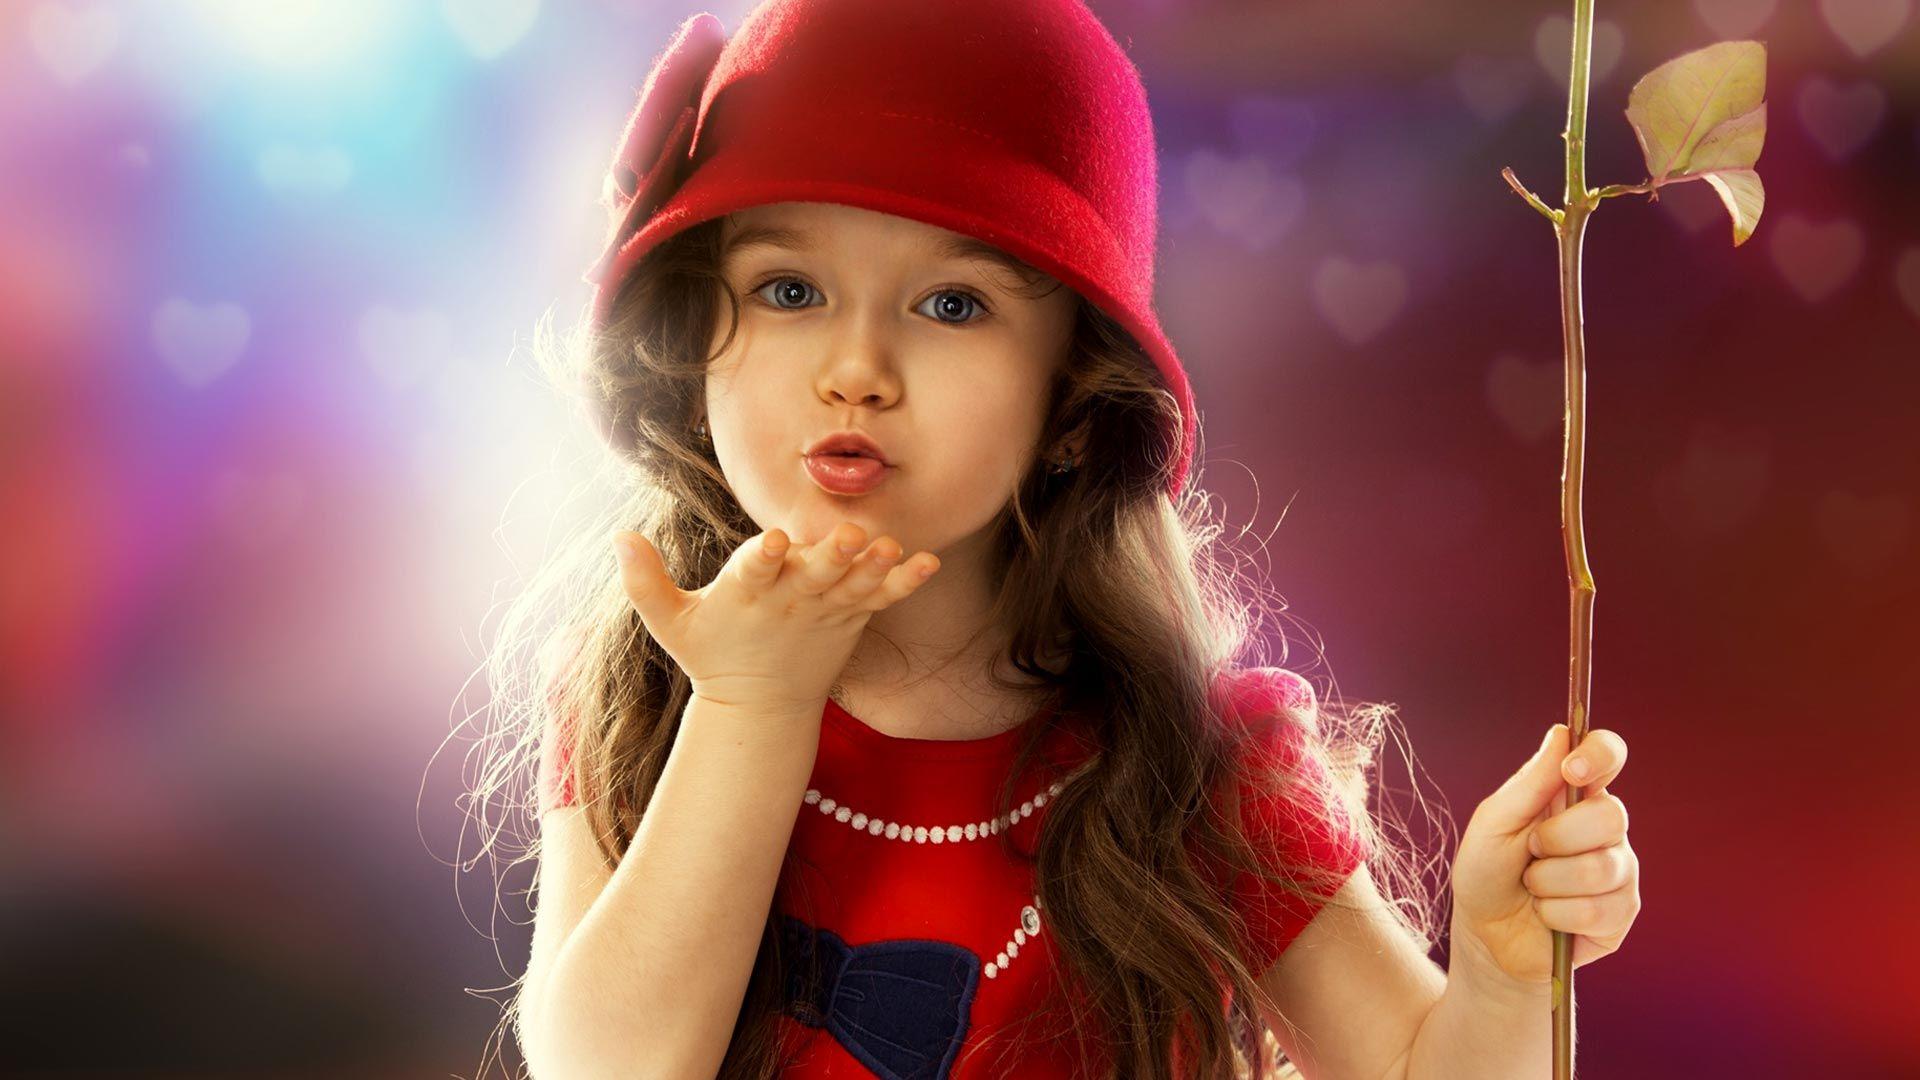 Sweet Little Girl HD Image. john. Cute red dresses, Cute